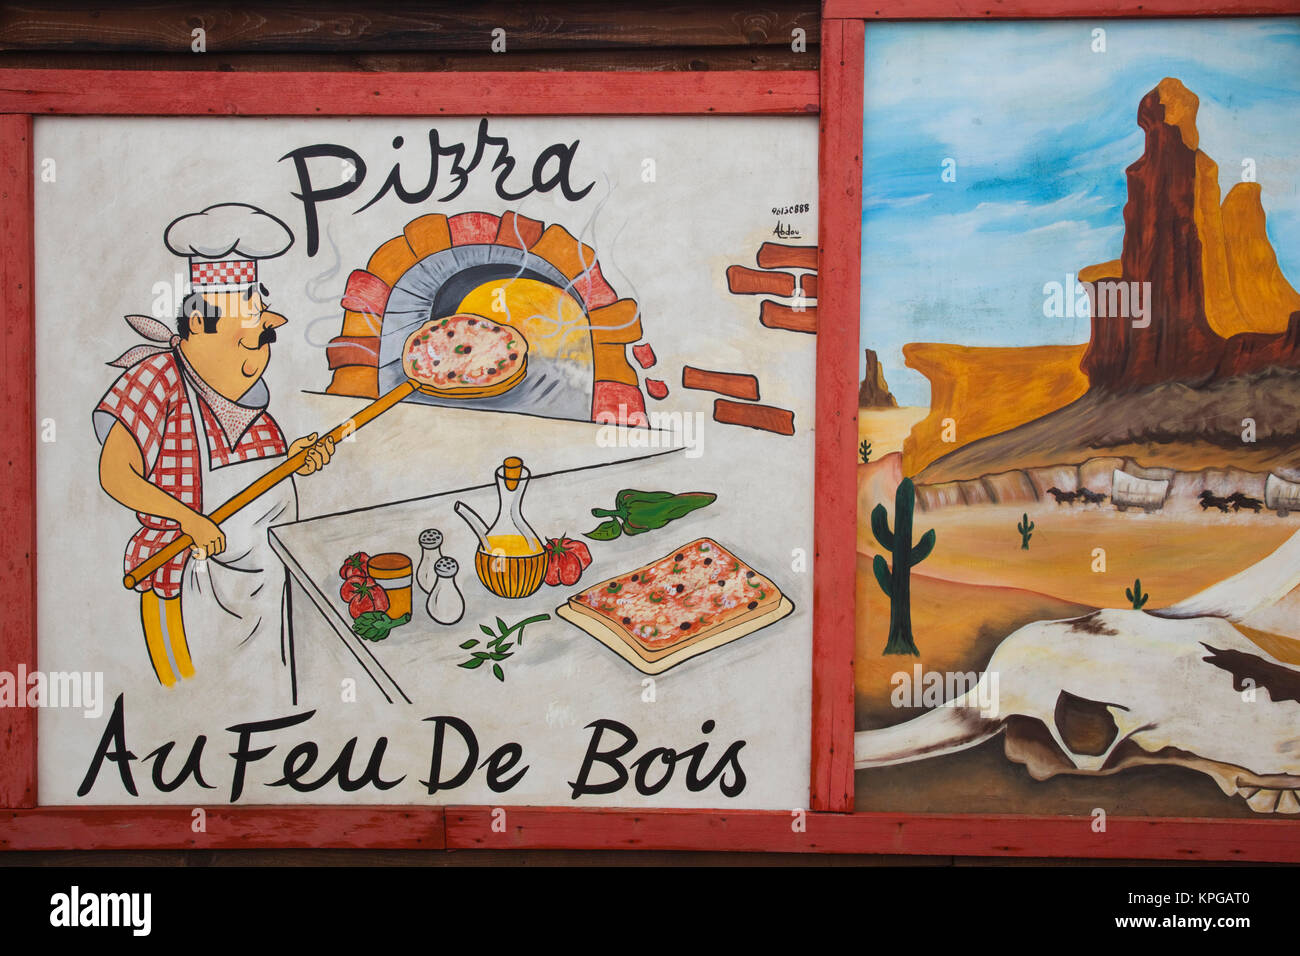 Tunisia, Tunisian Central Coast, Akouda, Route 66 theme restaurant, wood fired pizza sign Stock Photo